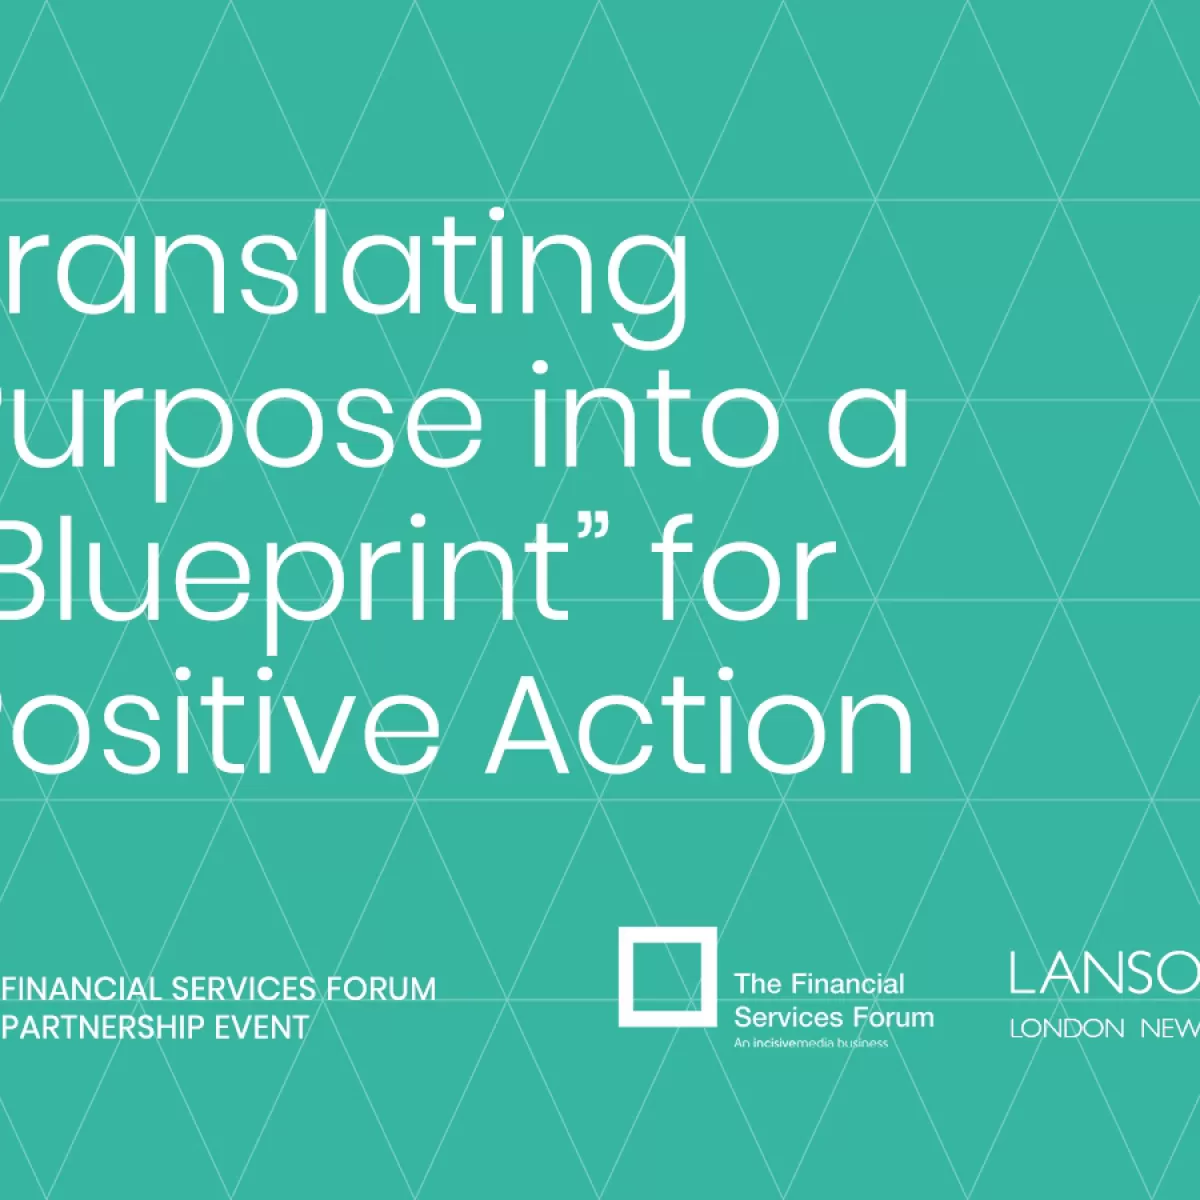 Financial Services Forum Translating Purpose Lansons LDN NY 1200x900